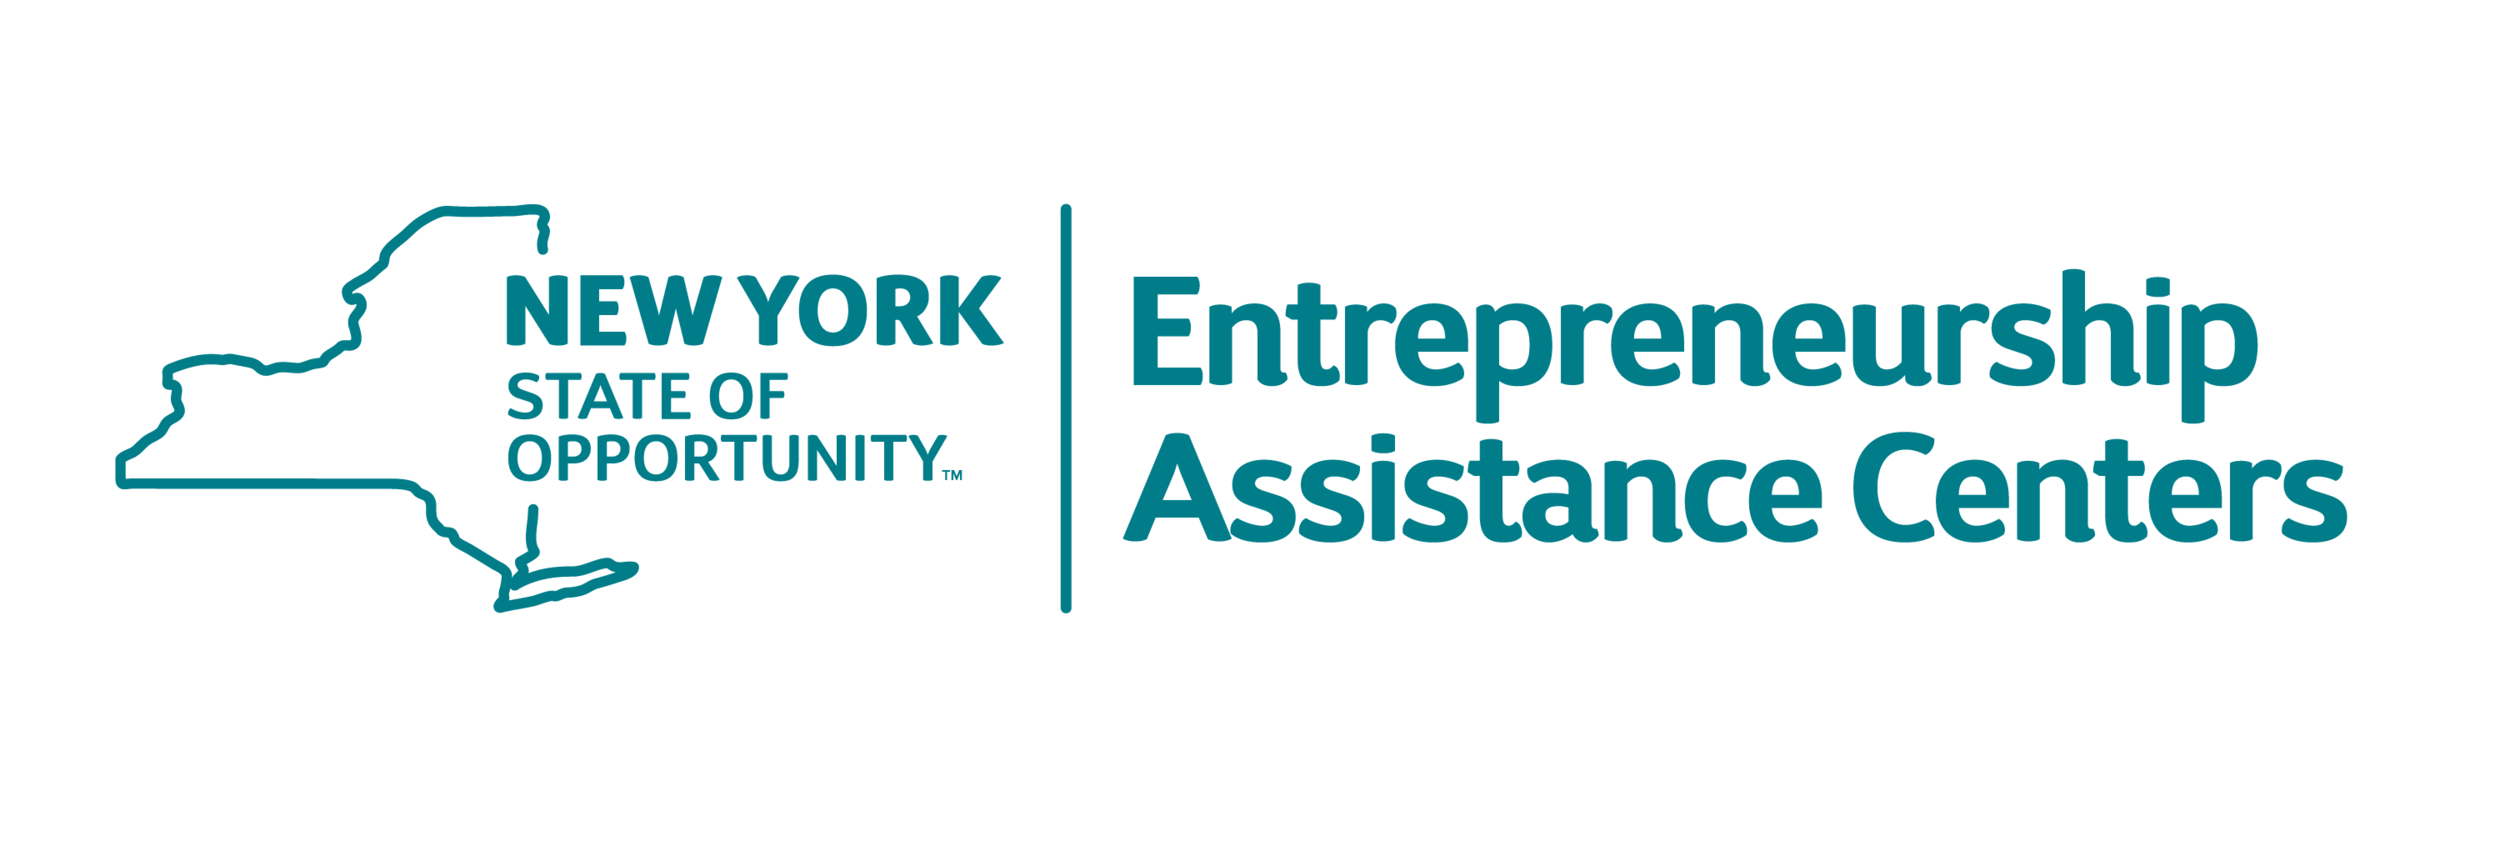 Entrepreneurship_Assistance_Centers_Logo-01.png